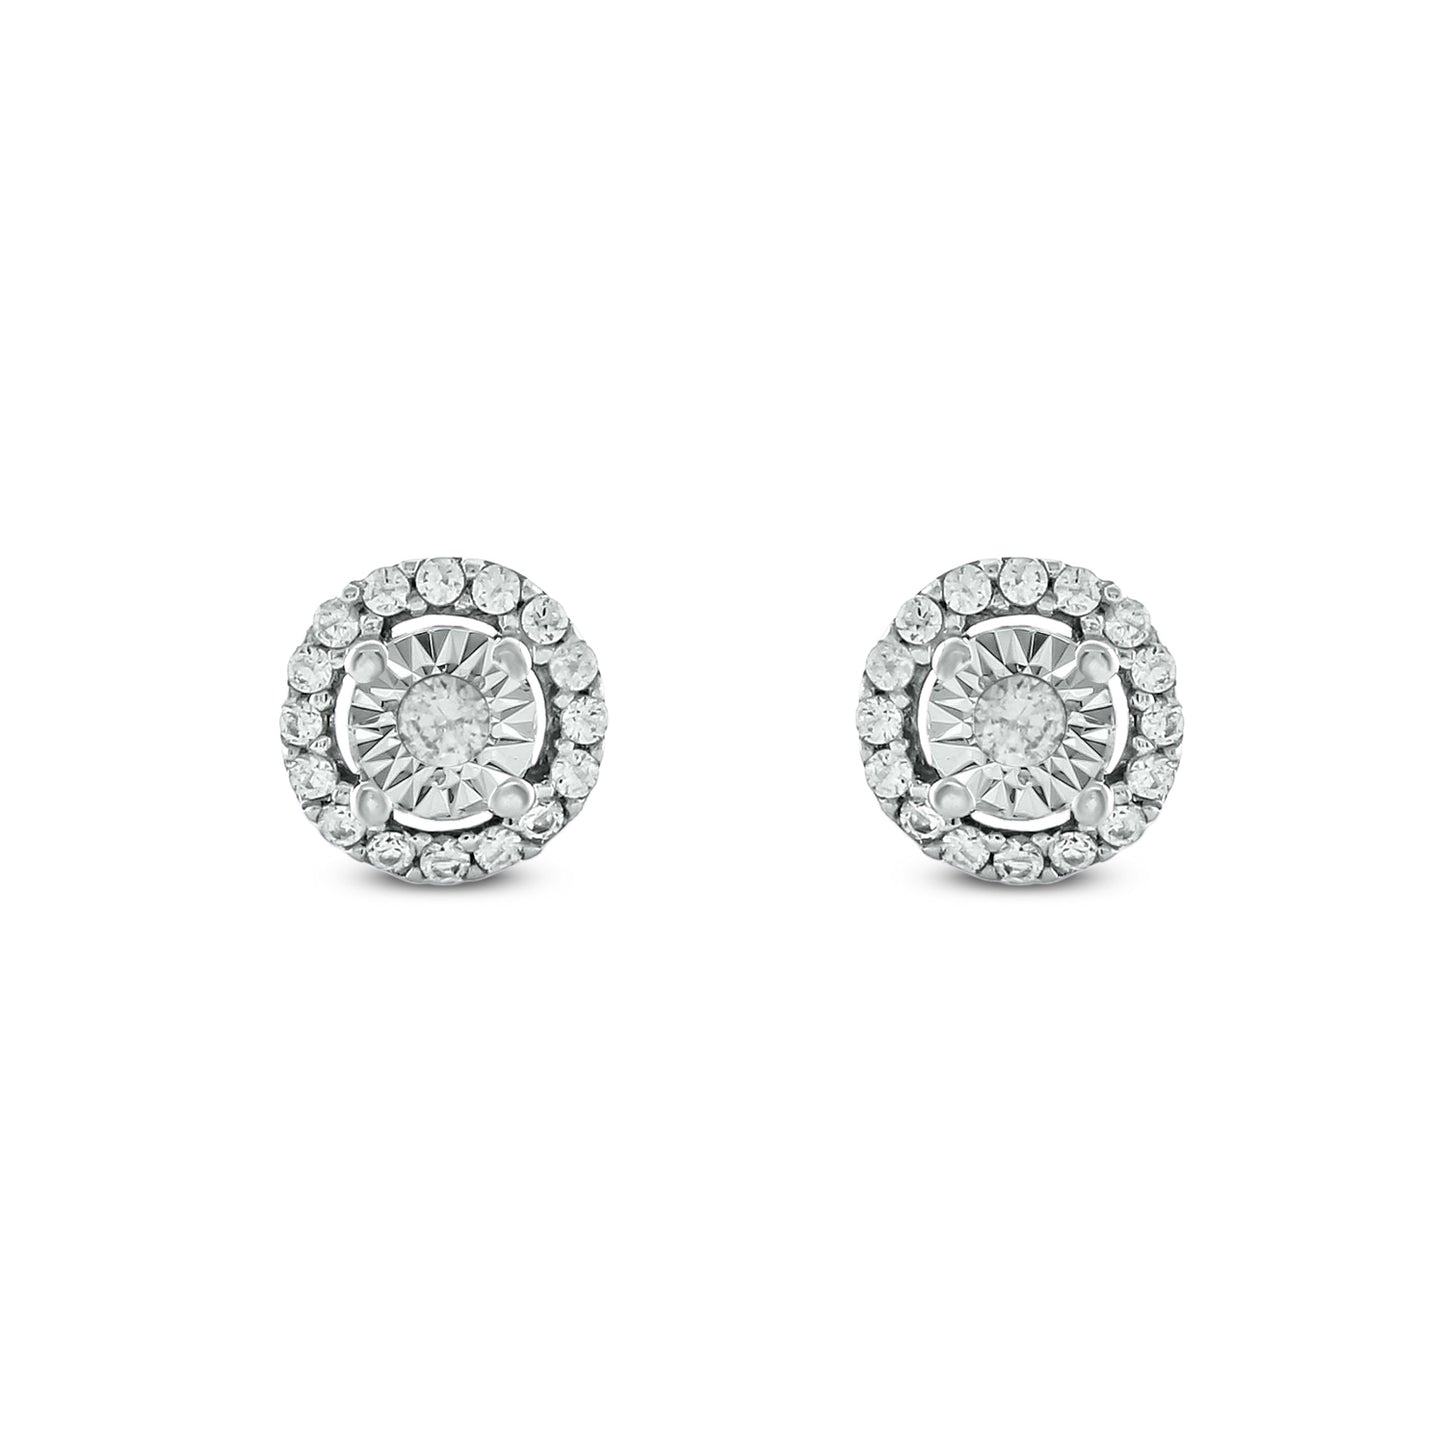 925 Sterling Silver Halo Round Diamond Stud Earrings